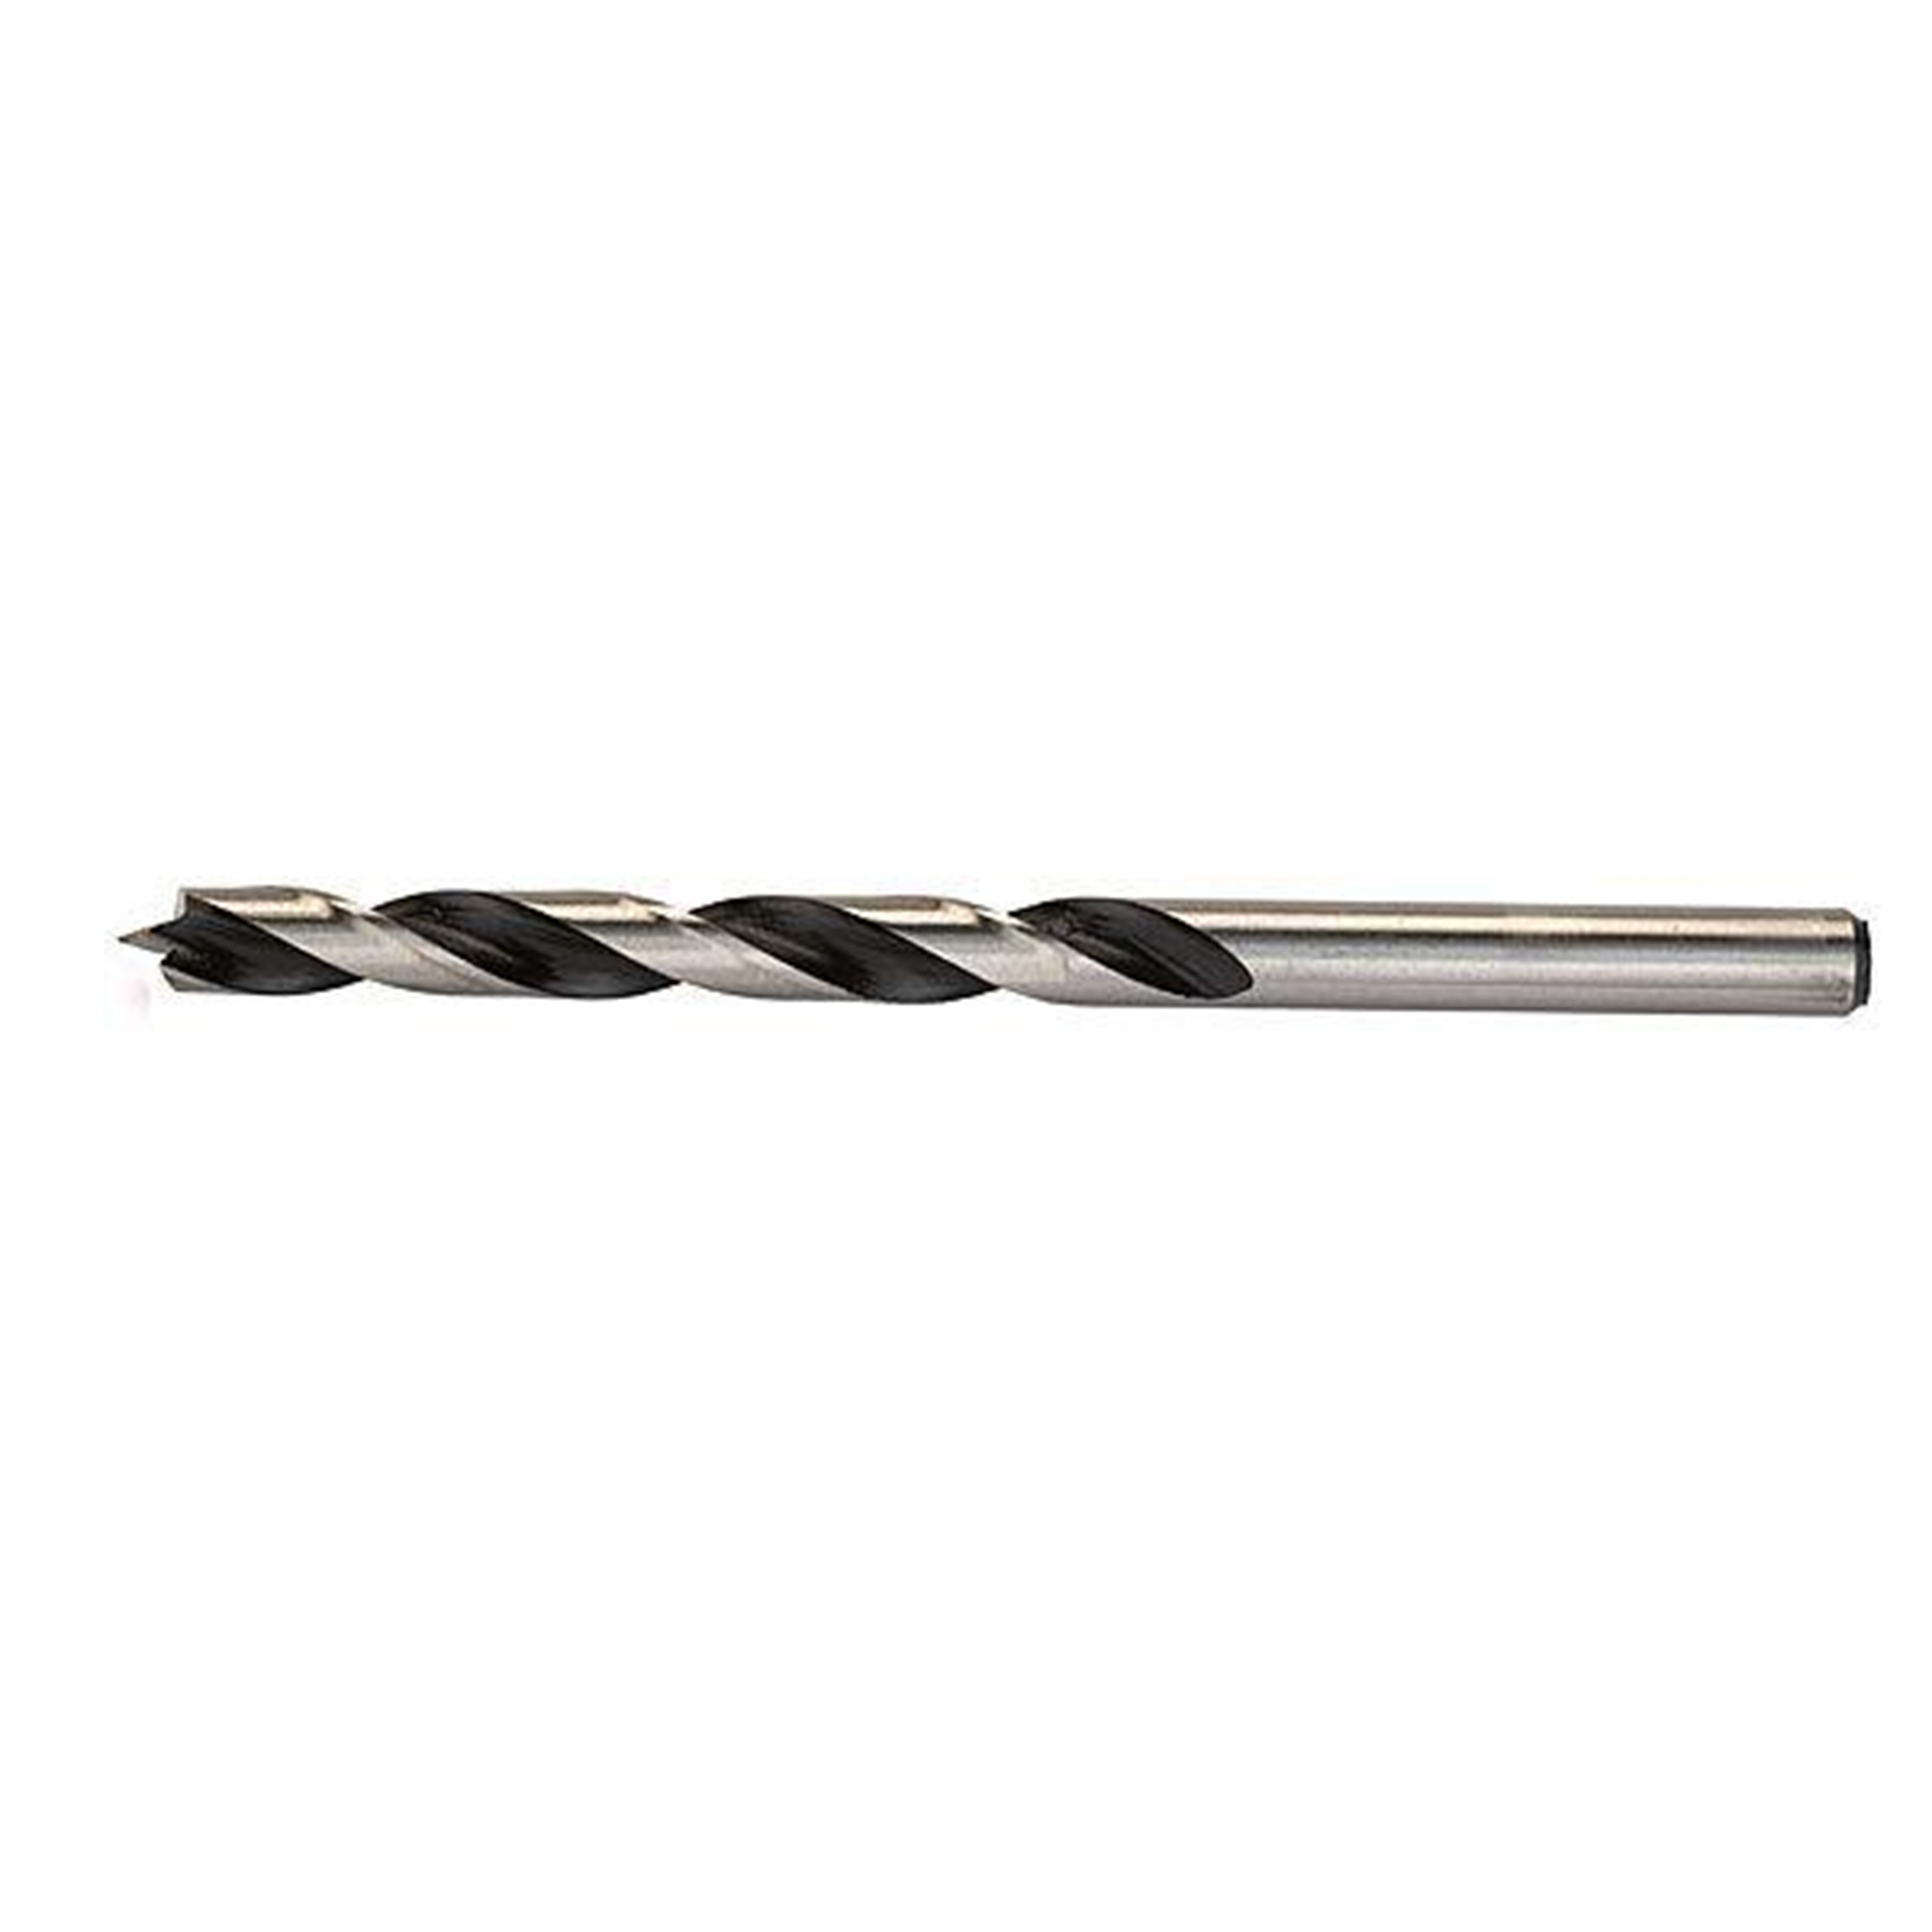 7mm Chrome-vanadium Steel Brad Point Drill Bit